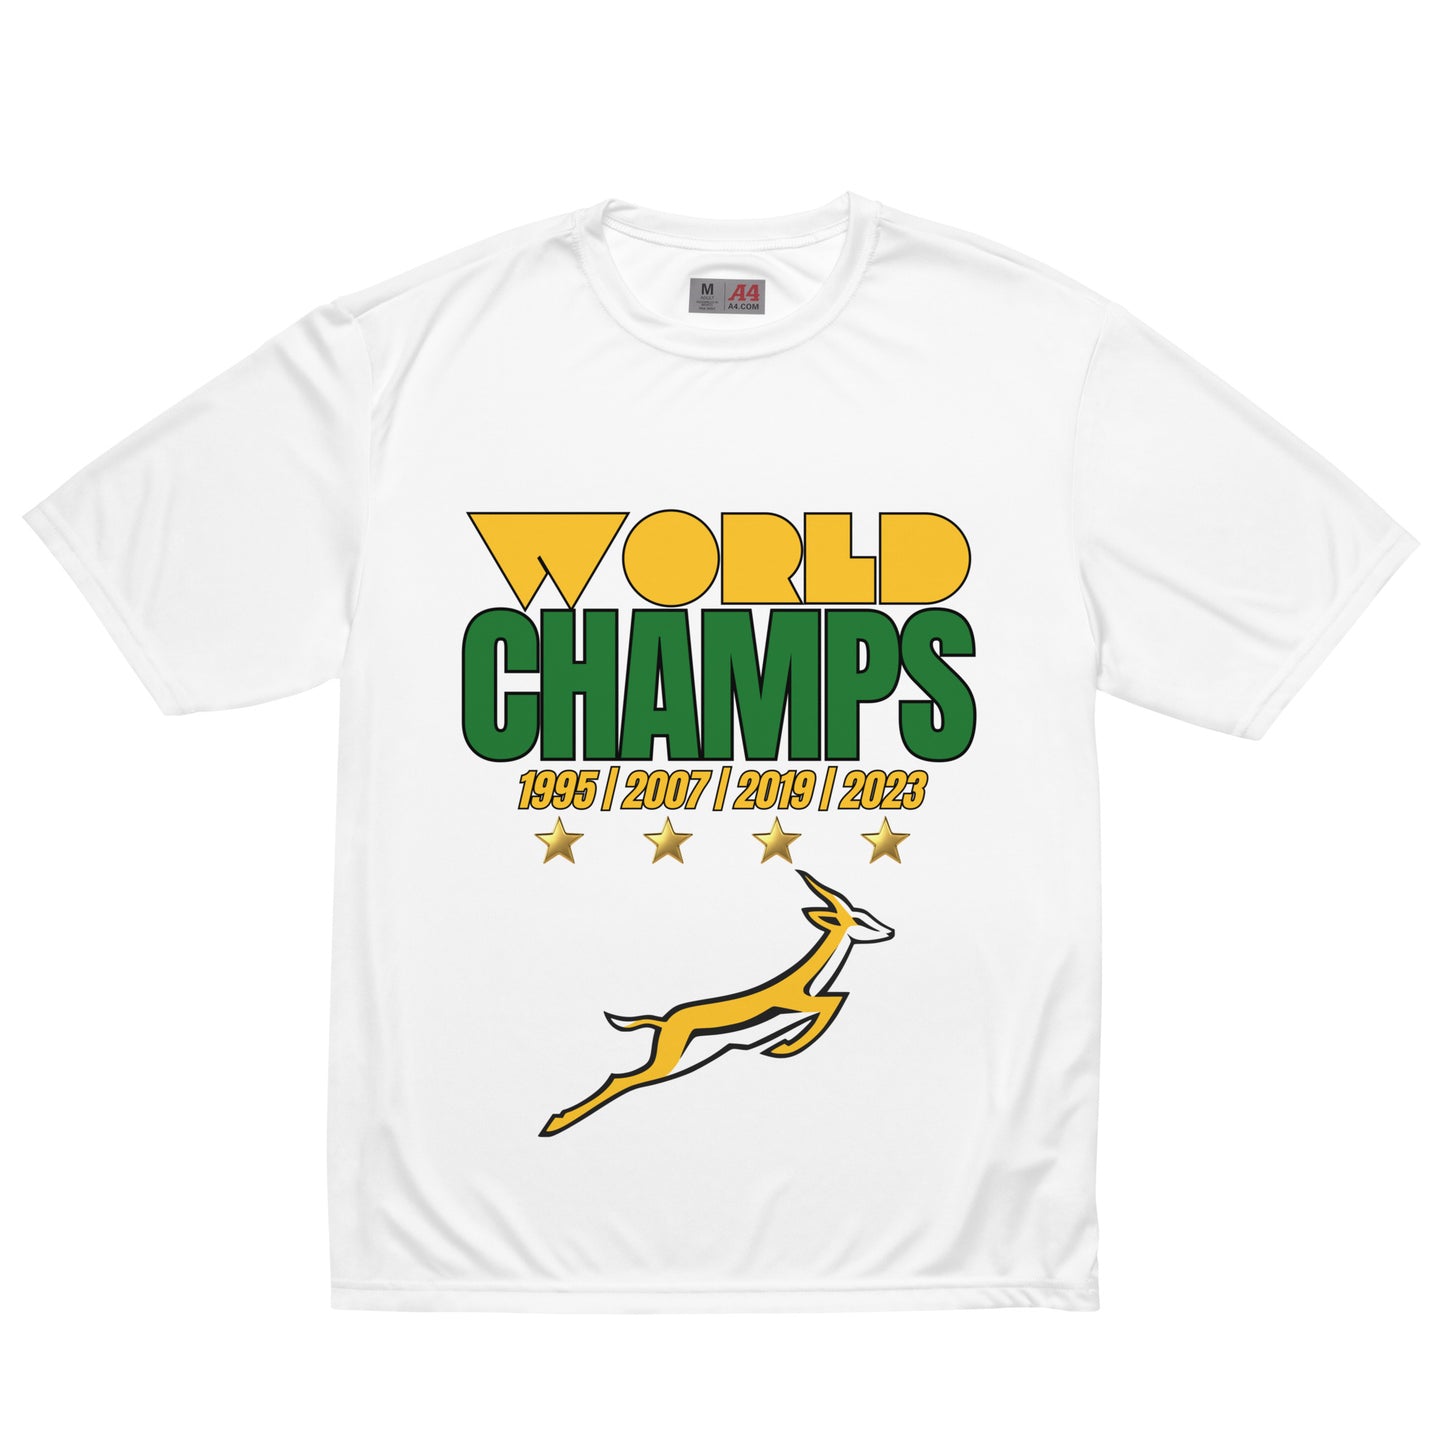 Unisex performance crew neck Springboks World Champs (Green/Gold) t-shirt